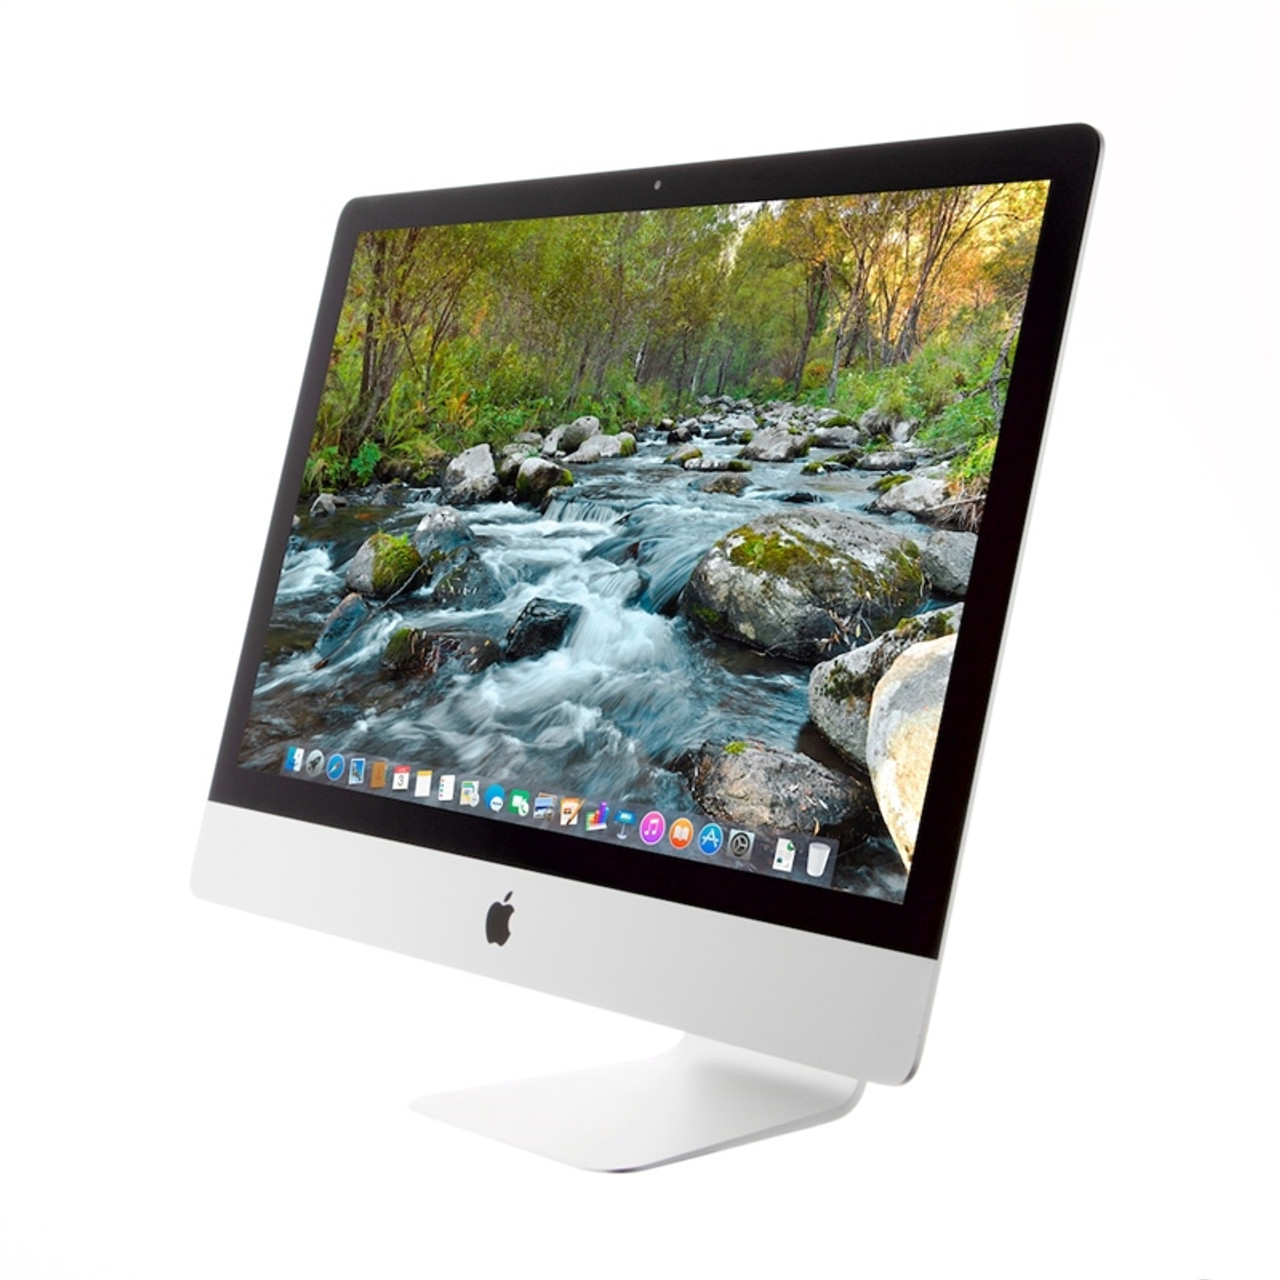 Apple iMac 27-inch 3.4GHz Quad-core i7 (Late 2012)